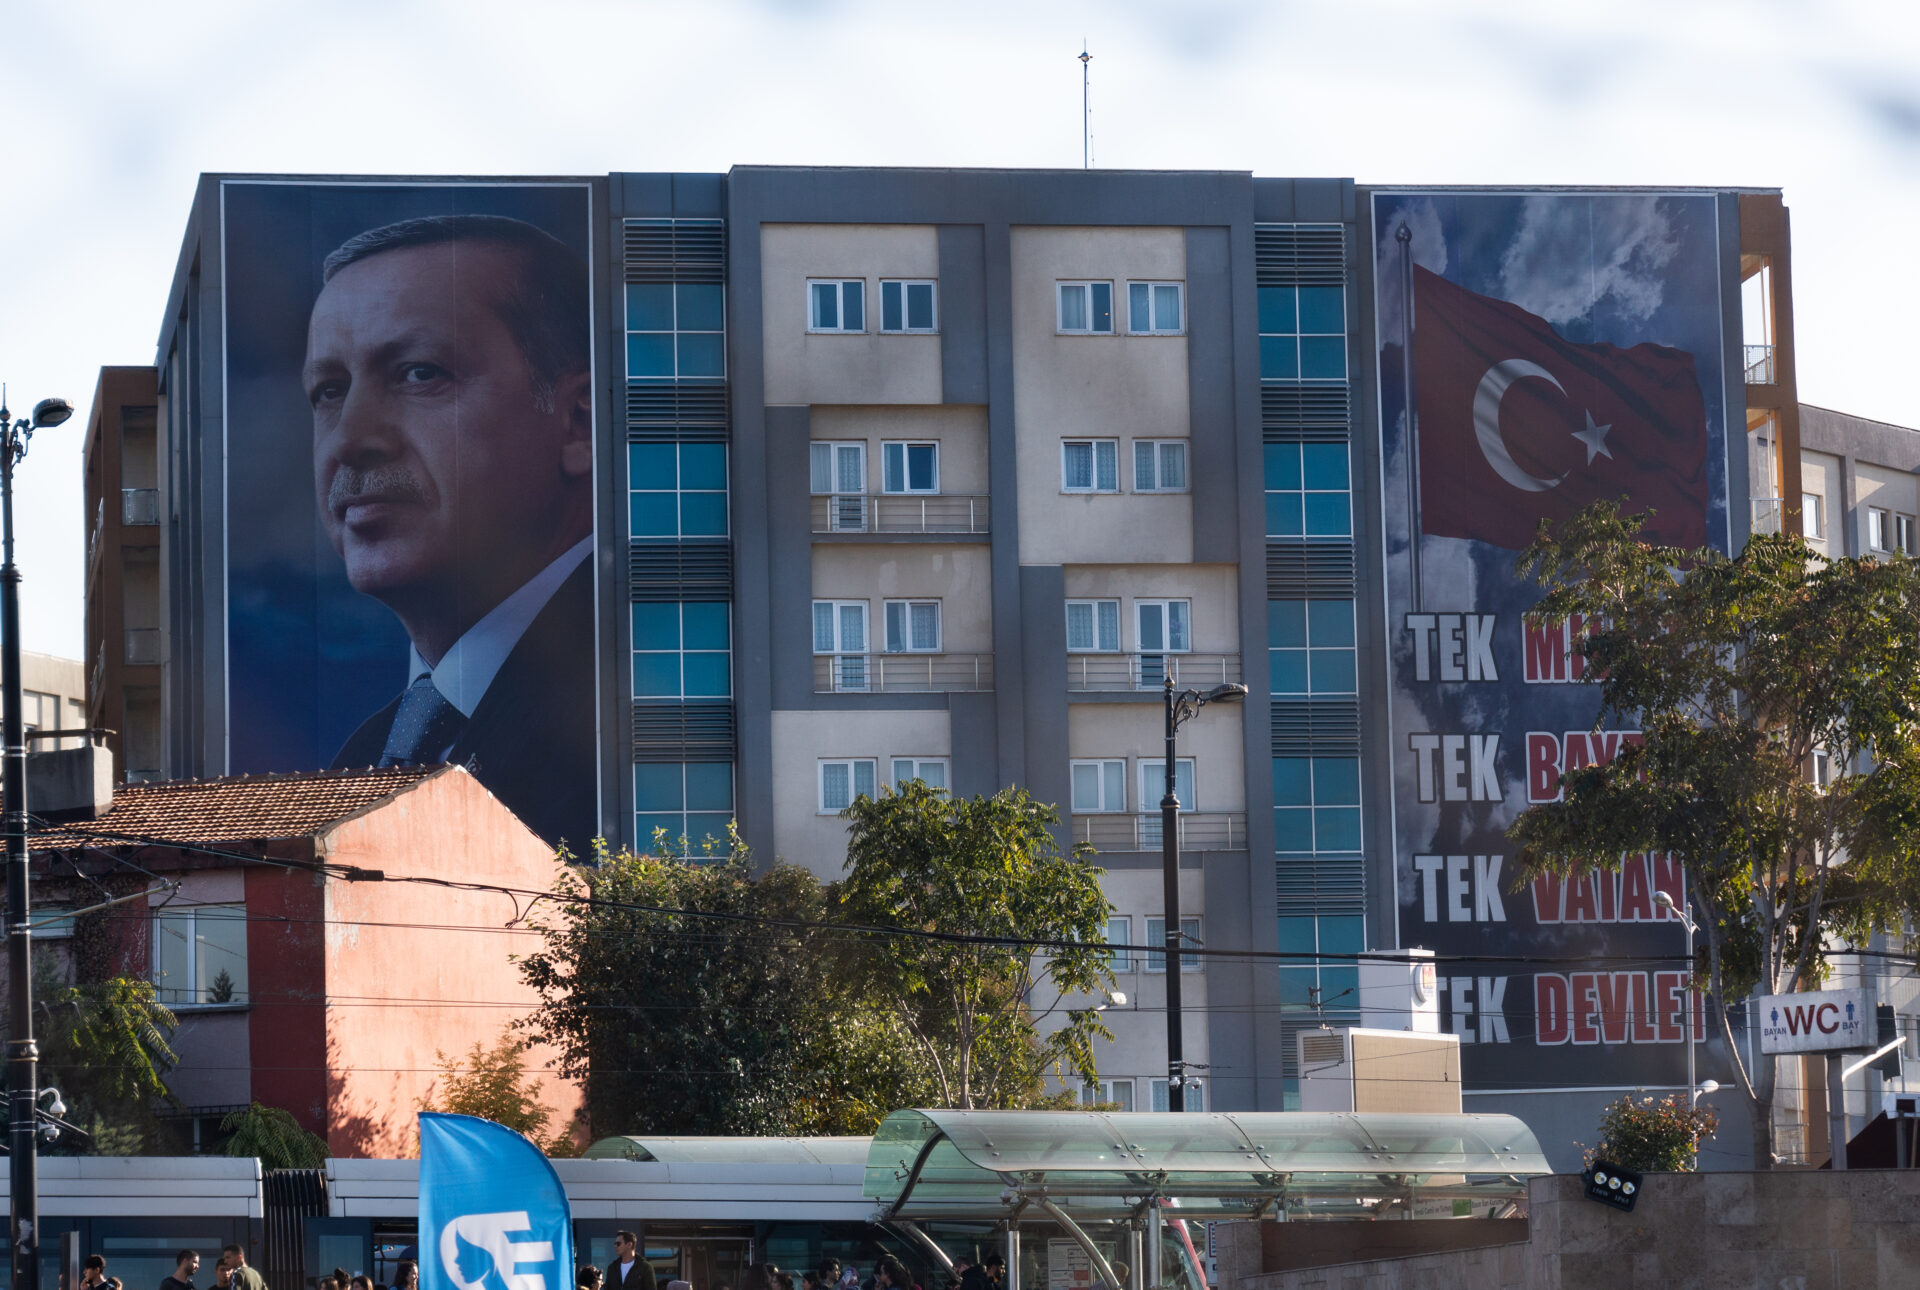 Recep Tayyip Erdoğan's portrait displayed on a building, published Nov. 5, 2019 (Tom Page via Wikimedia Commons)